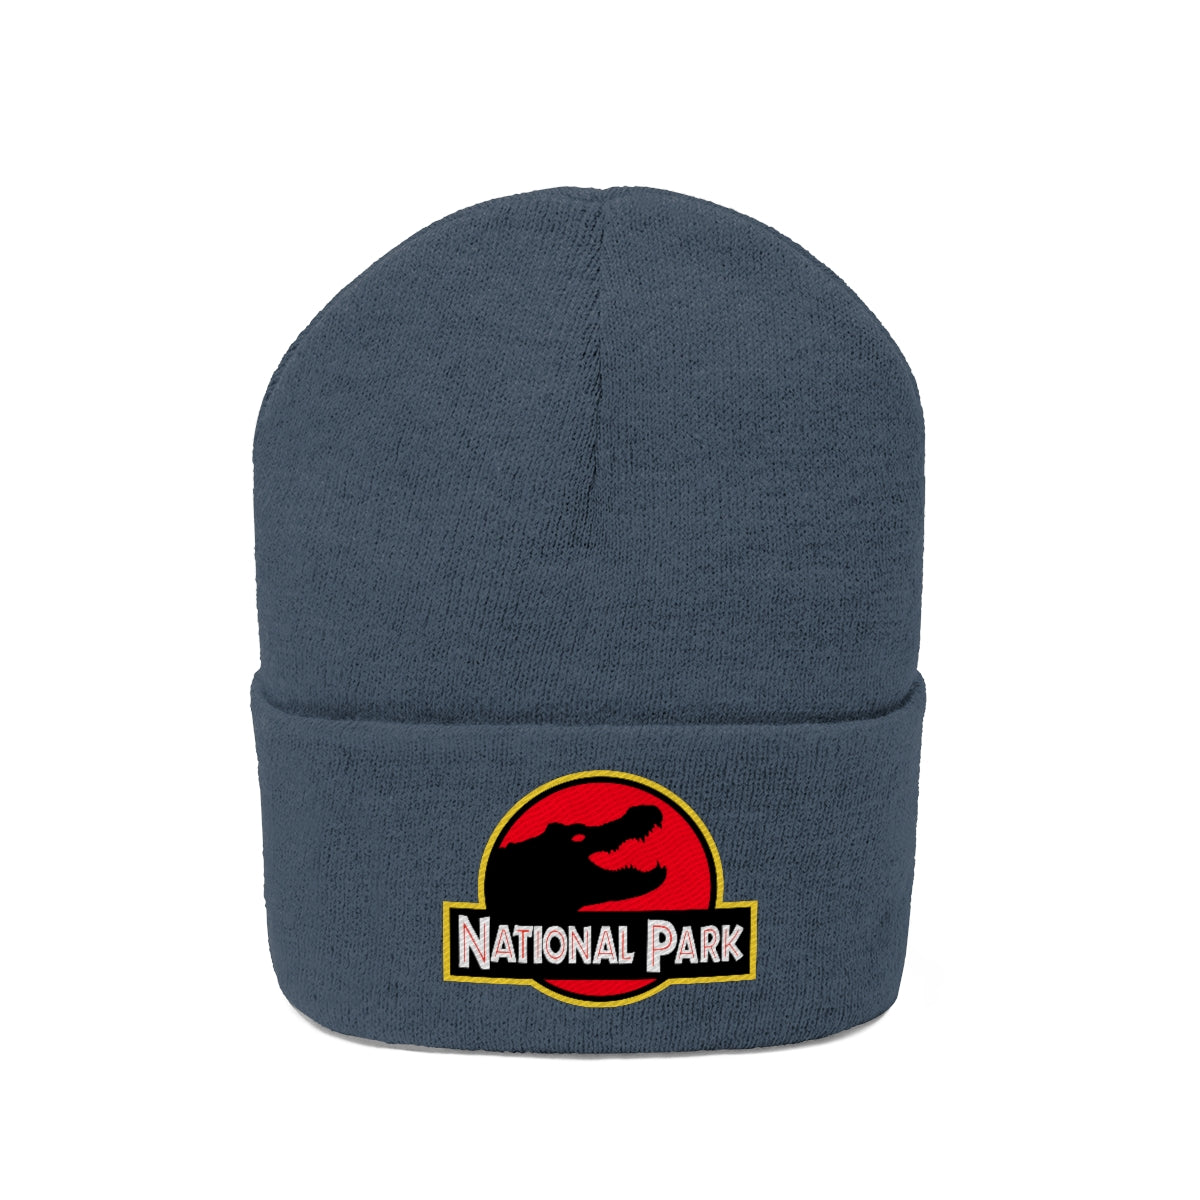 Everglades National Park Hat - Knit Beanie Sewn Parody Logo